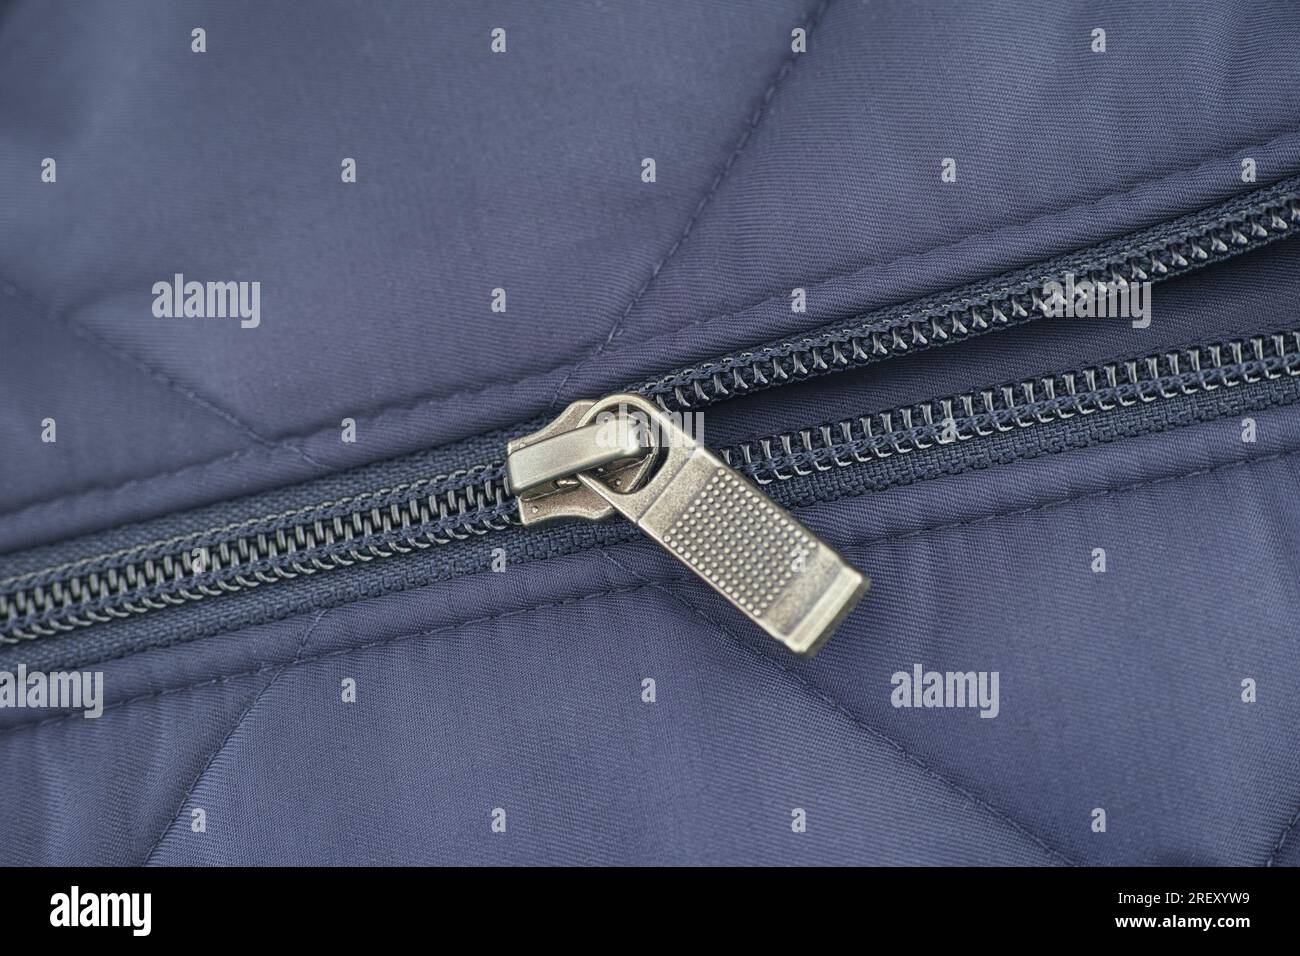 Closeup shot of a zipper on a blue jacket. Close up. Stock Photo